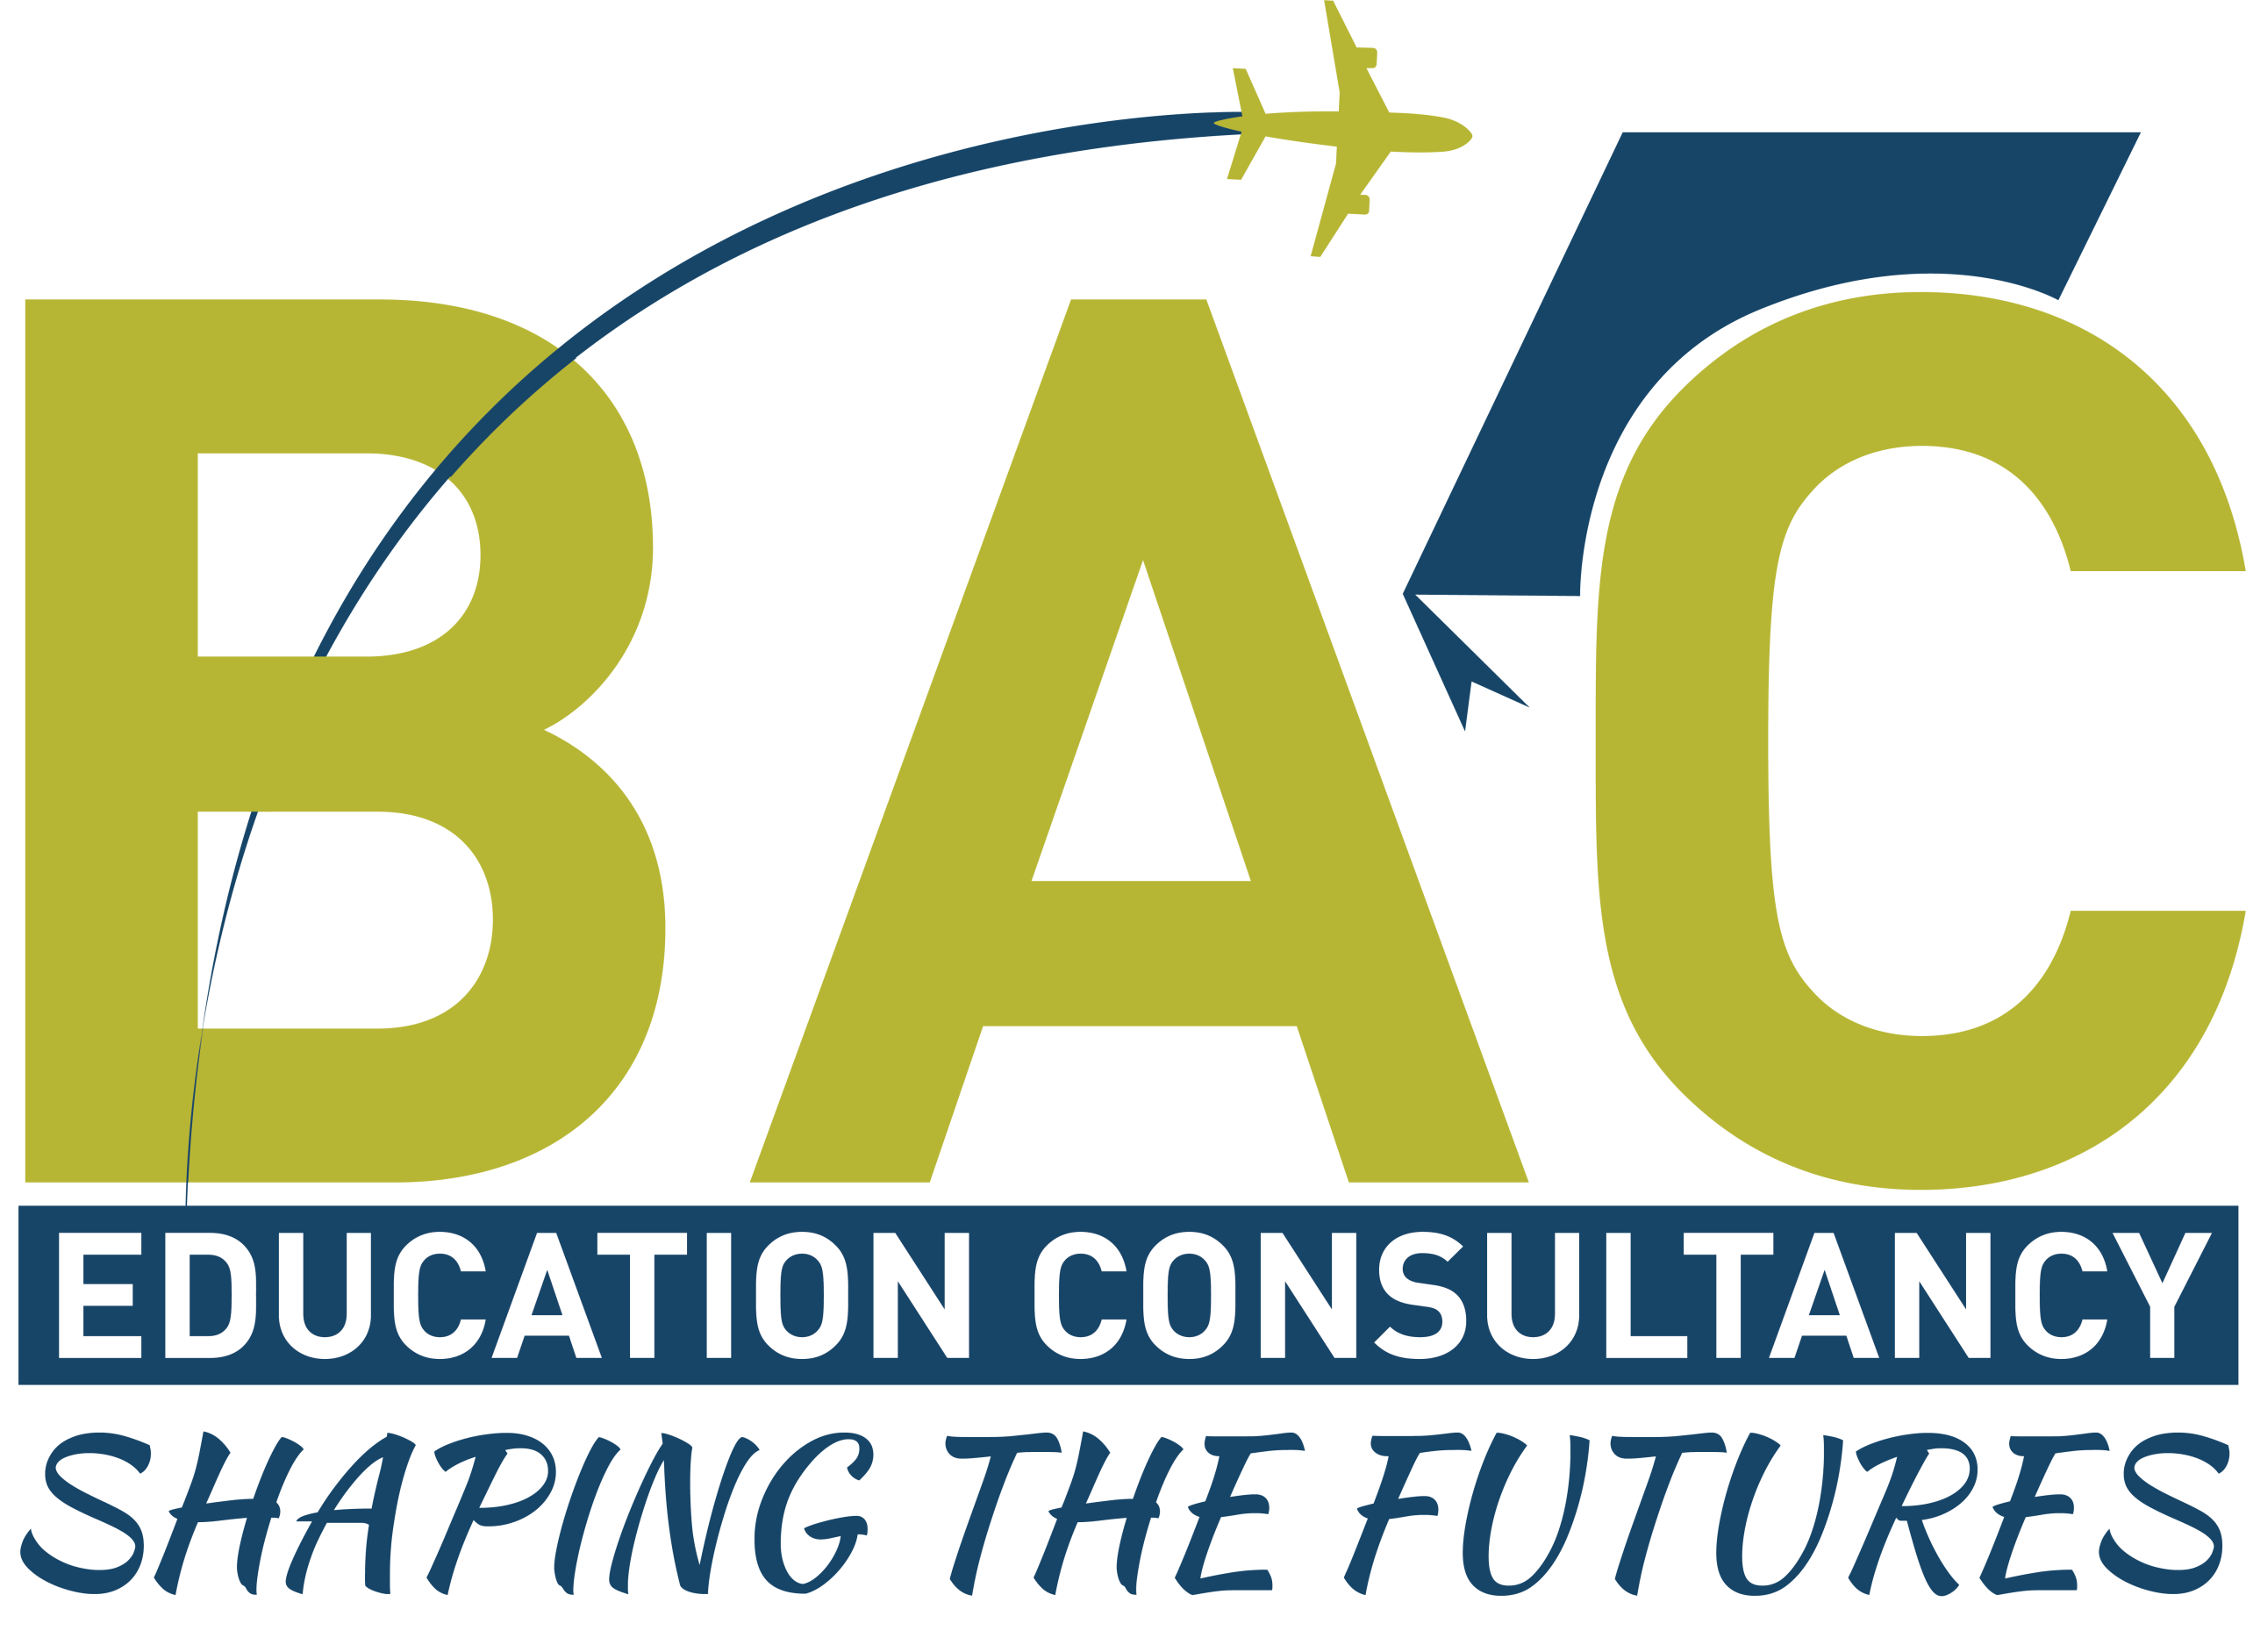 Logo - Baceducations